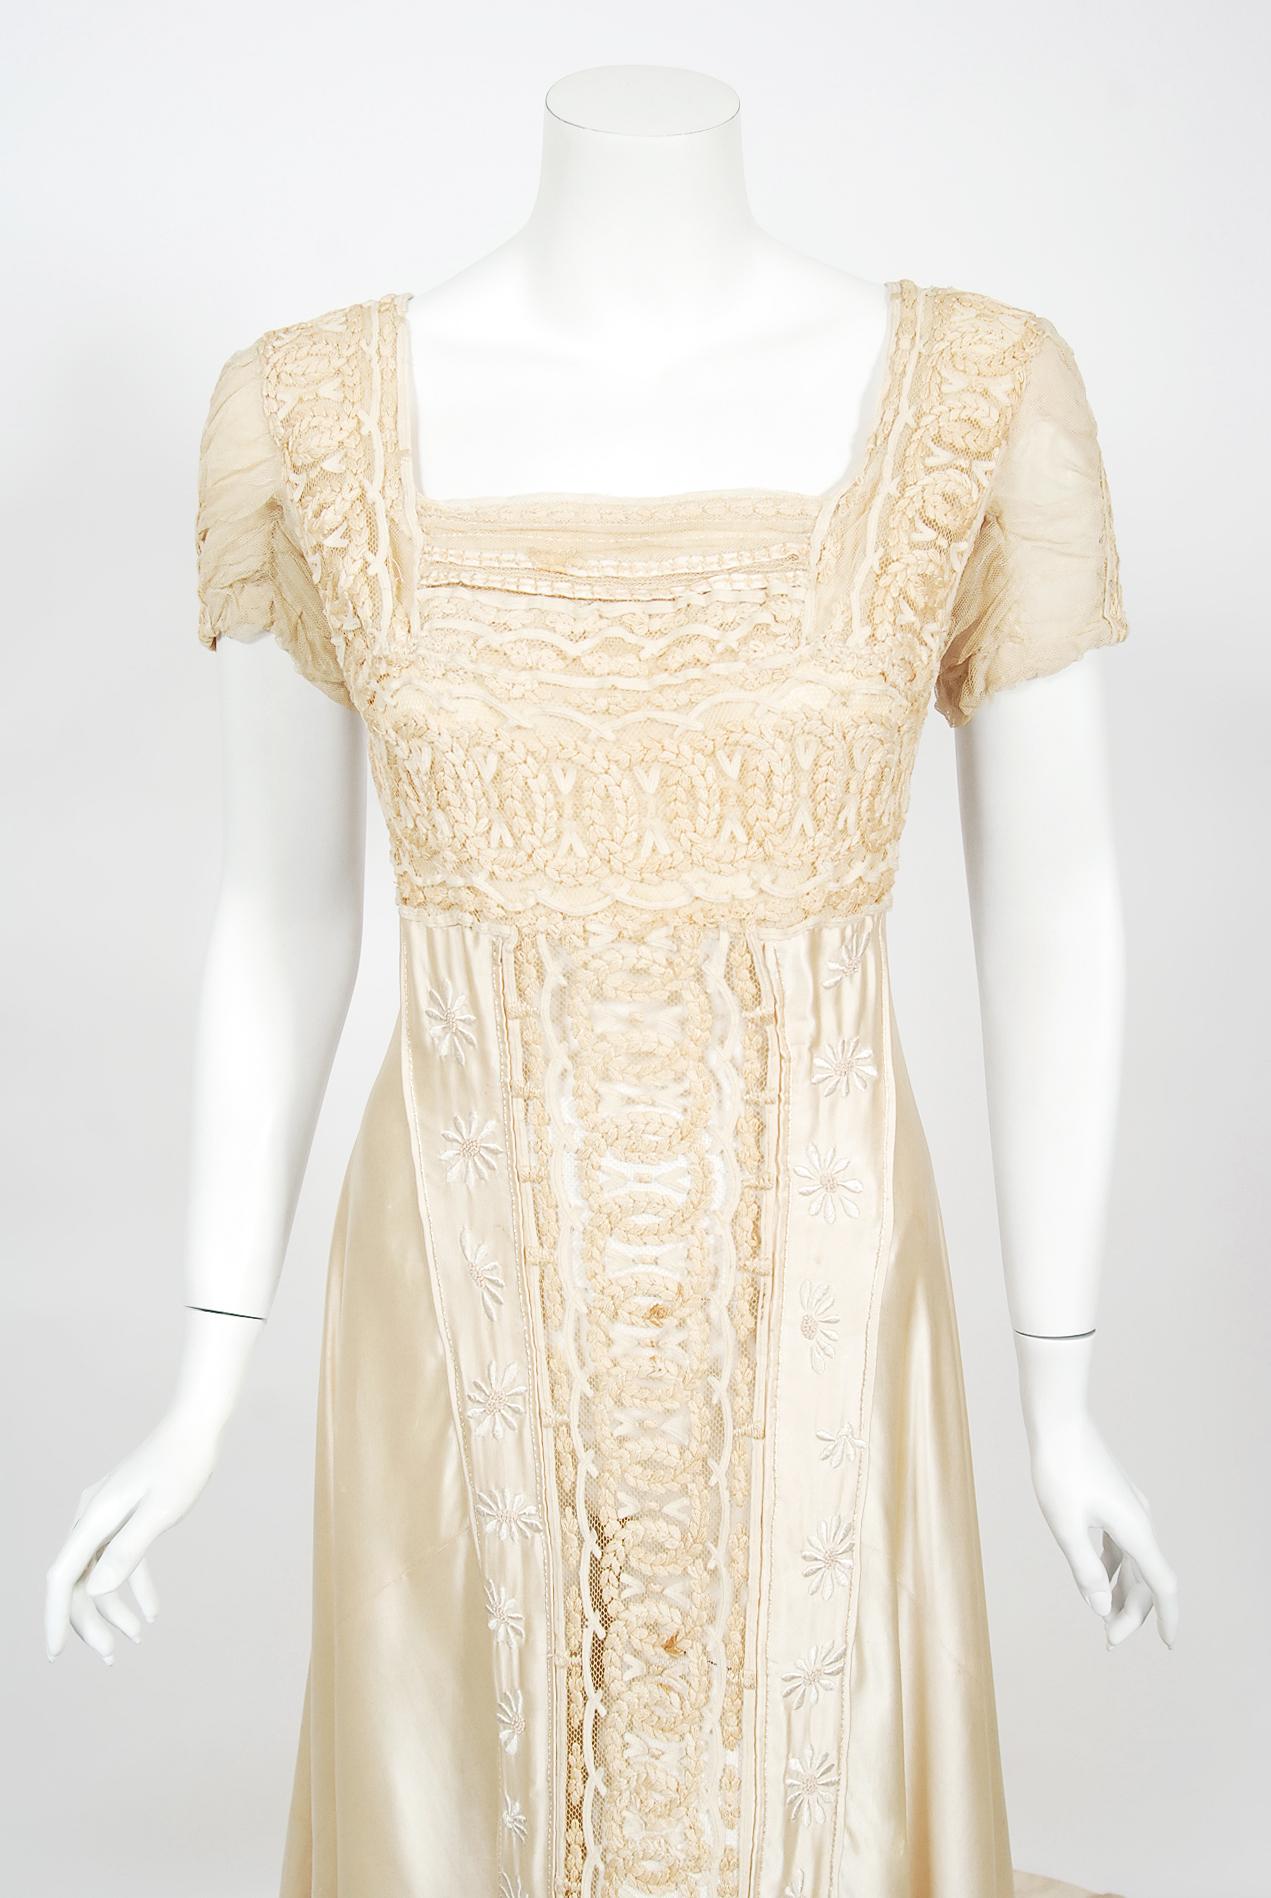 1910s wedding dress